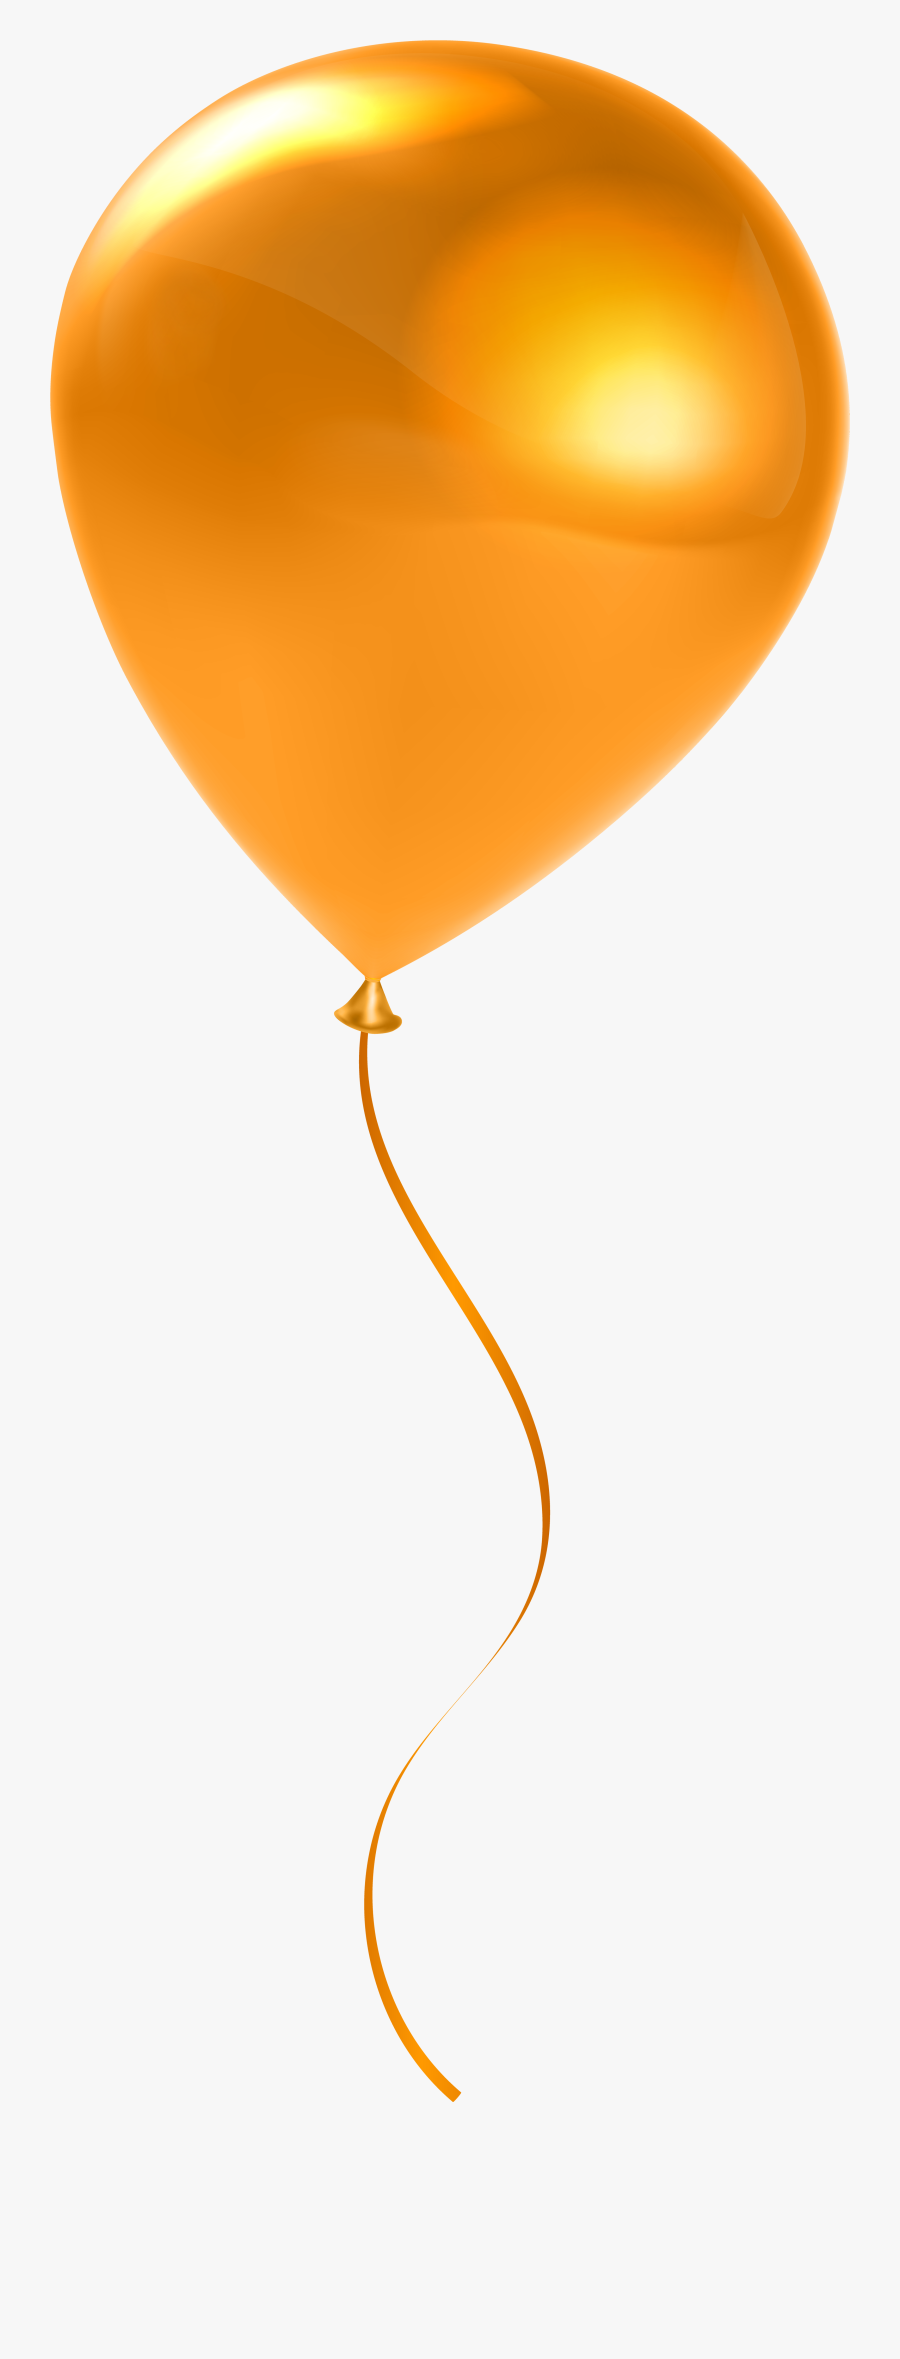 Single Orange Balloon Transparent Clip Artu200b Gallery - Orange Balloon Transparent Background, Transparent Clipart